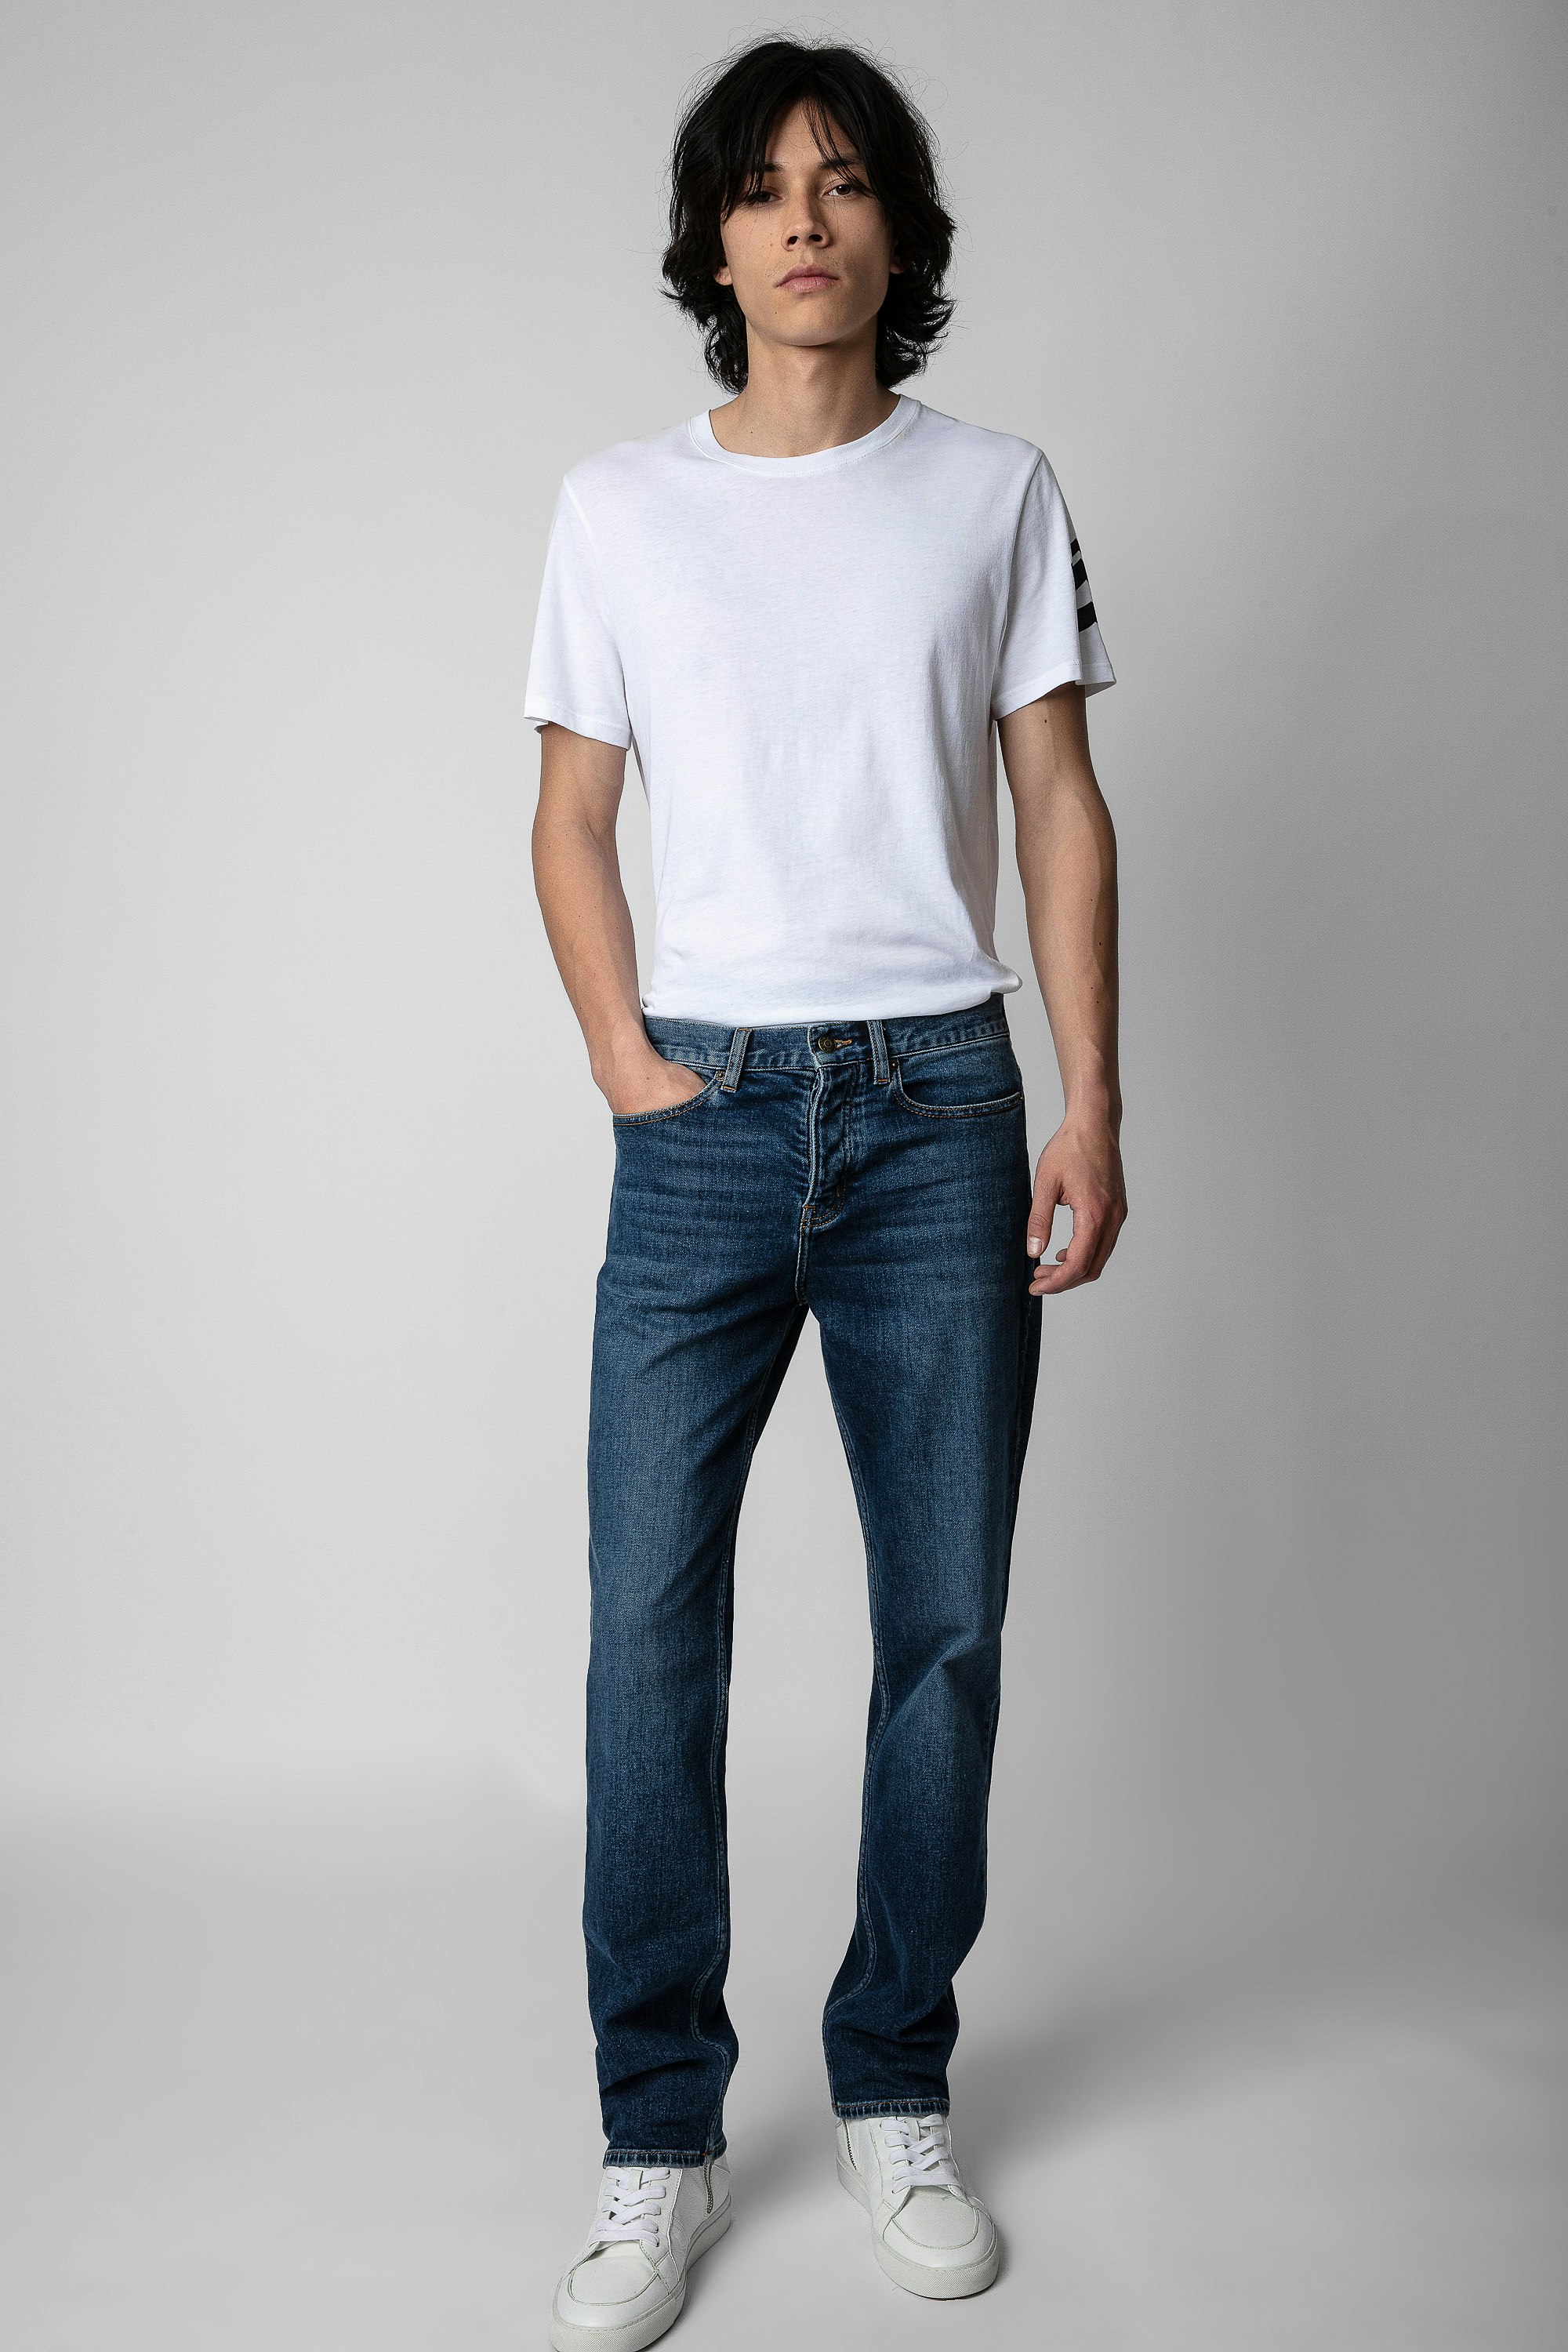 John Jeans - Men’s straight-cut blue denim jeans